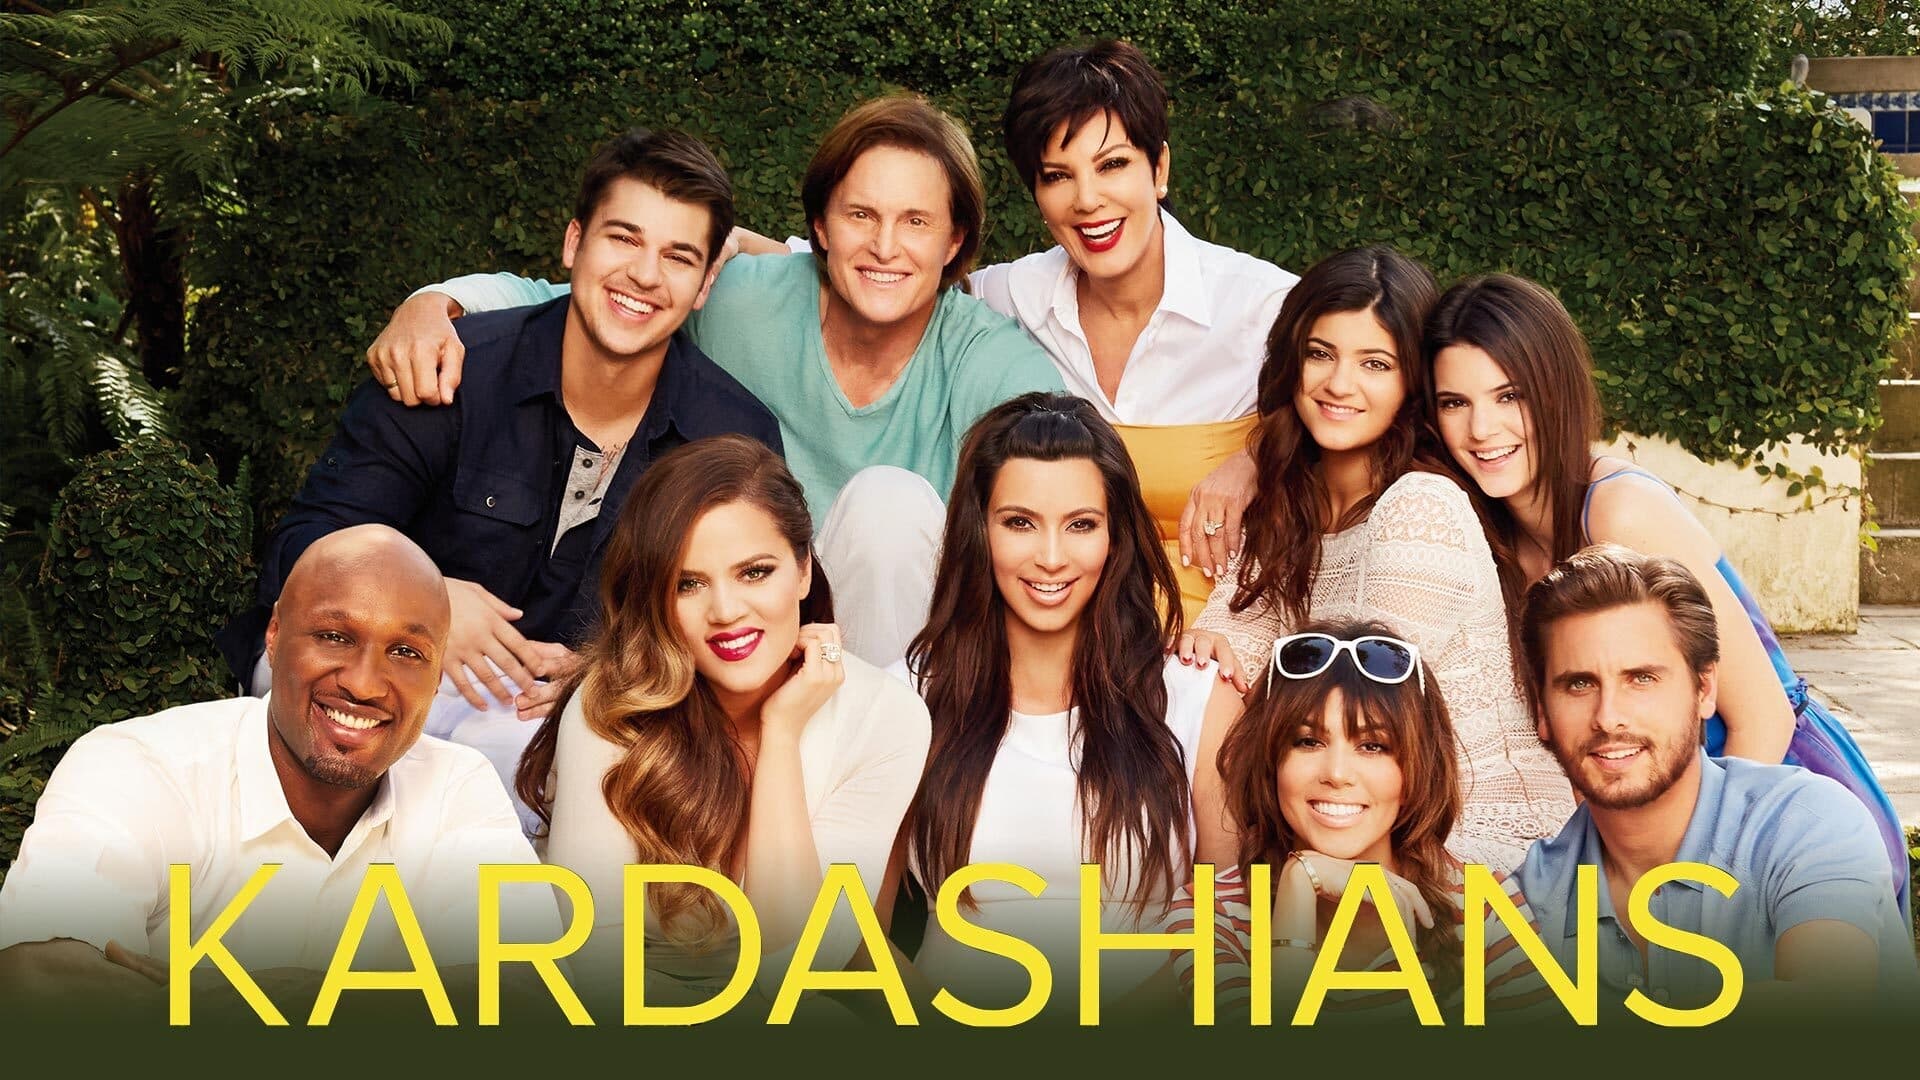 Keeping Up with the Kardashians - Season 1